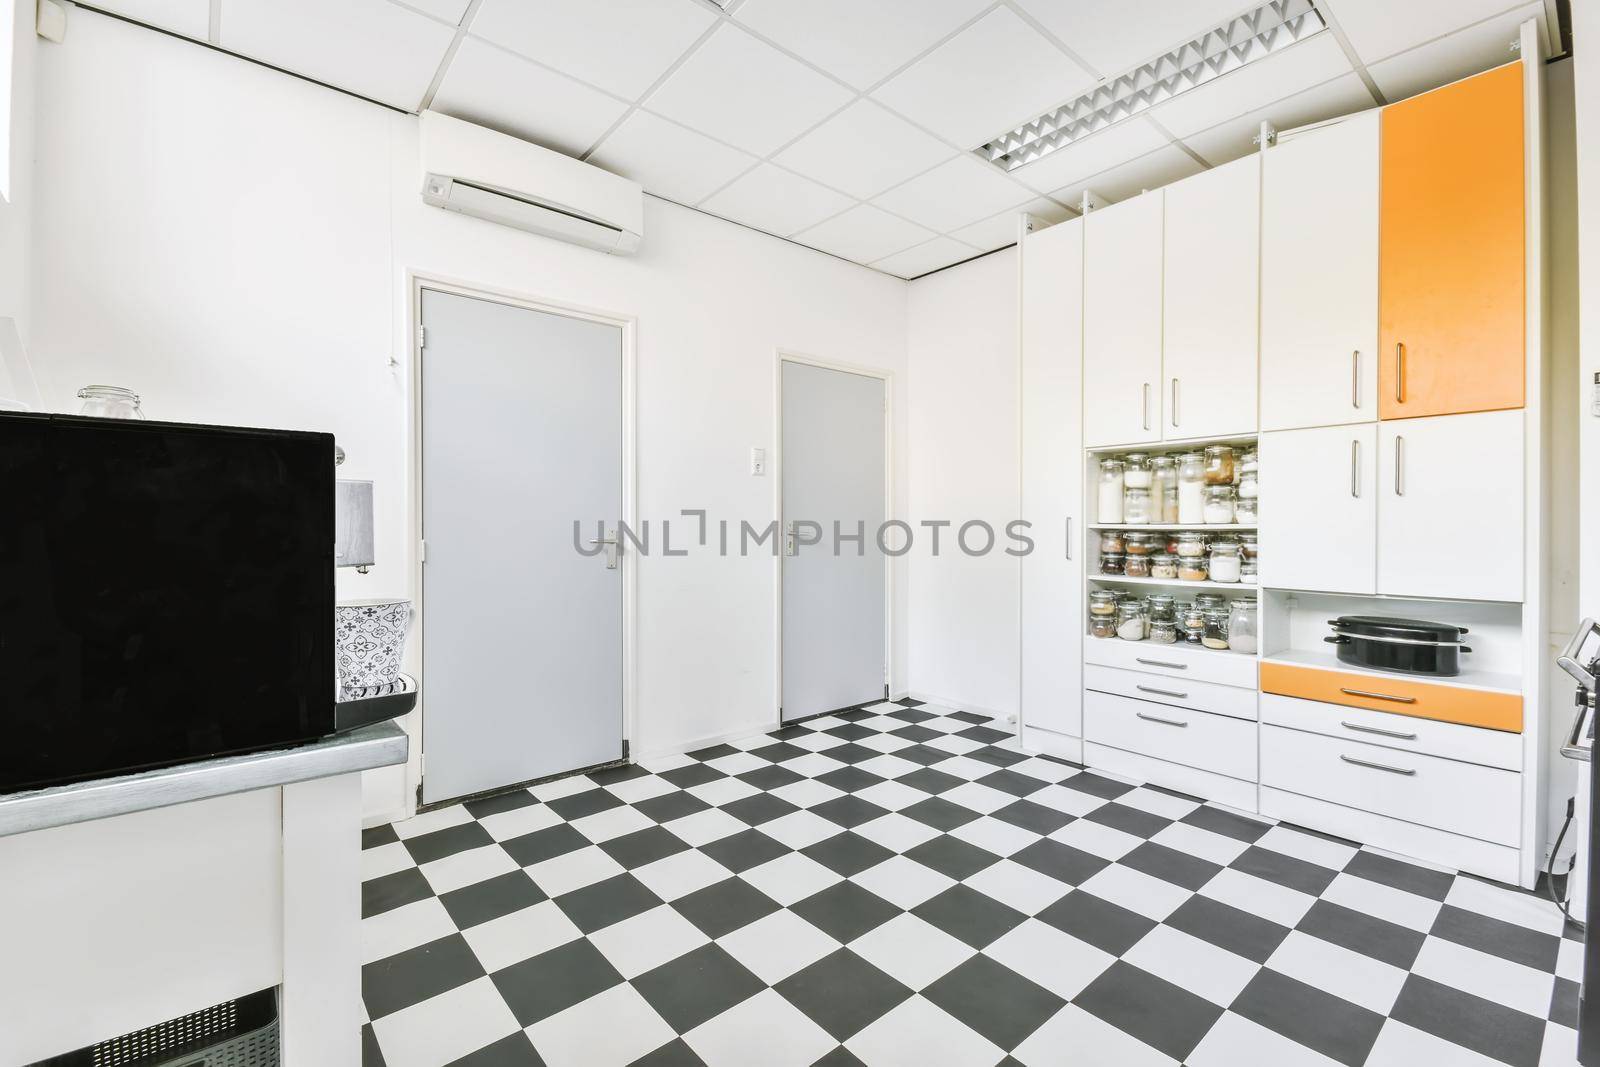 Design of wonderful room with checkerboard floor